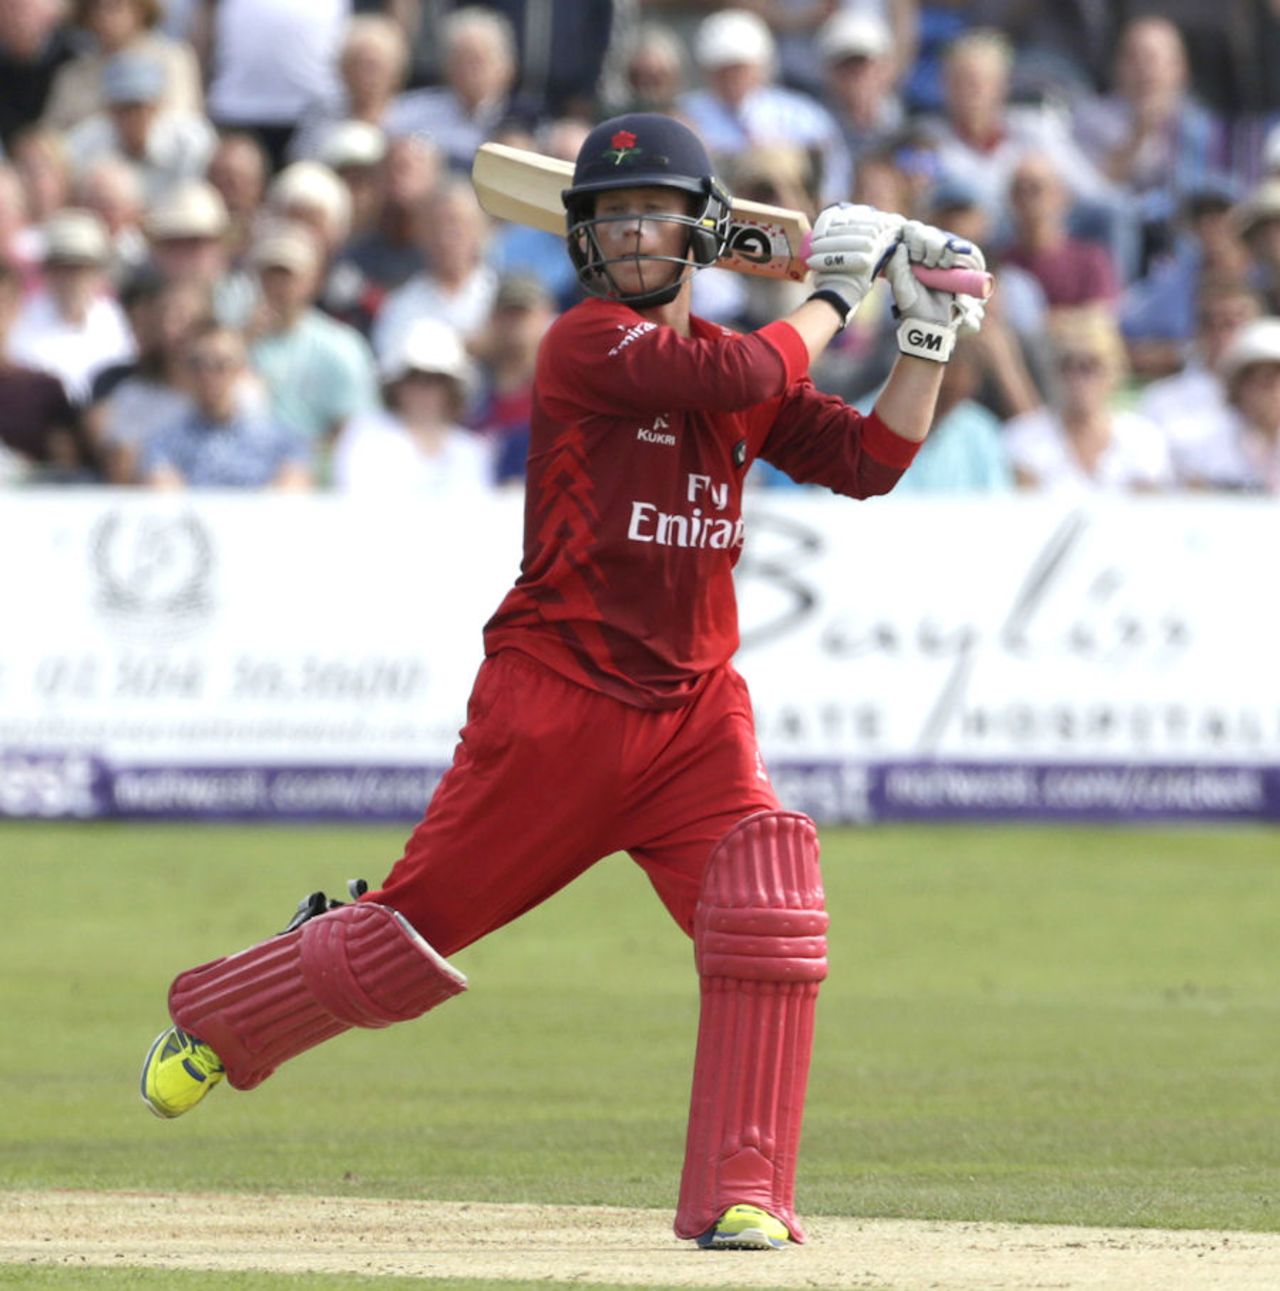 Alex Davies, Lancashire, bats during their NatWest quarter-final at Canterbury against Kent, August 15, 2015